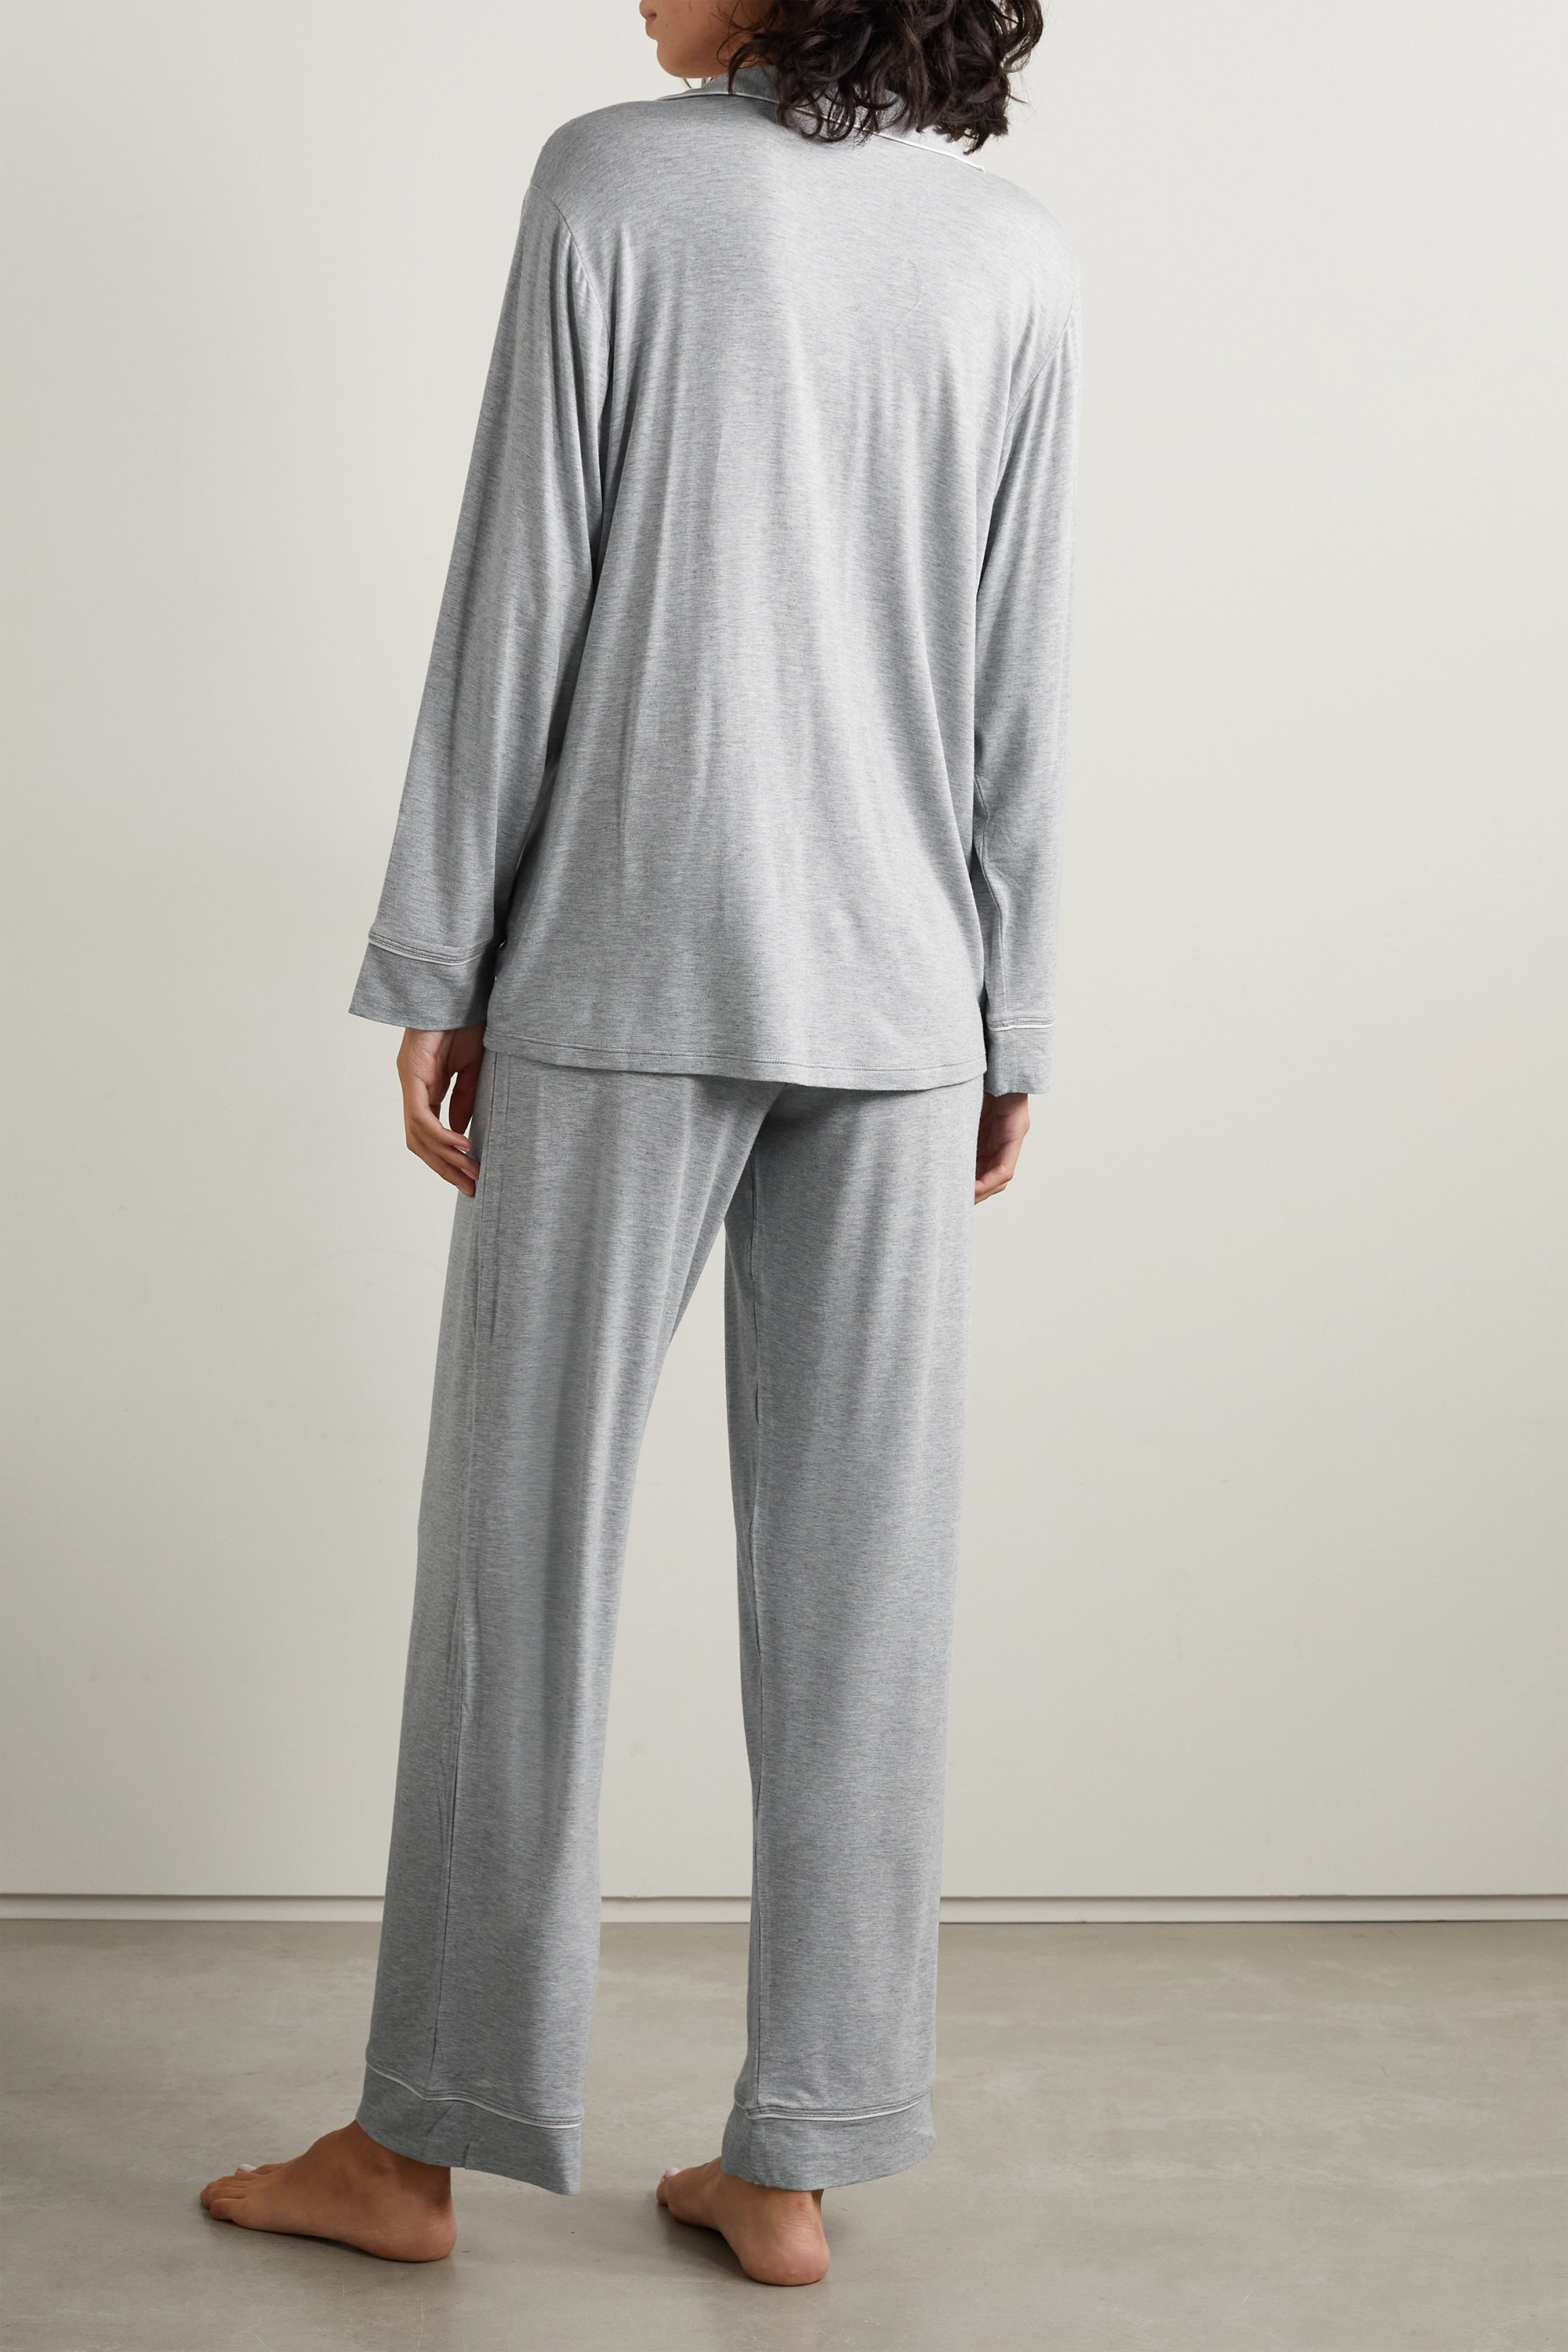 EBERJEY пижамный комплект Gisele из эластичного модала с окантовкой, серый eberjey пижамный комплект gisele из эластичного модала черный